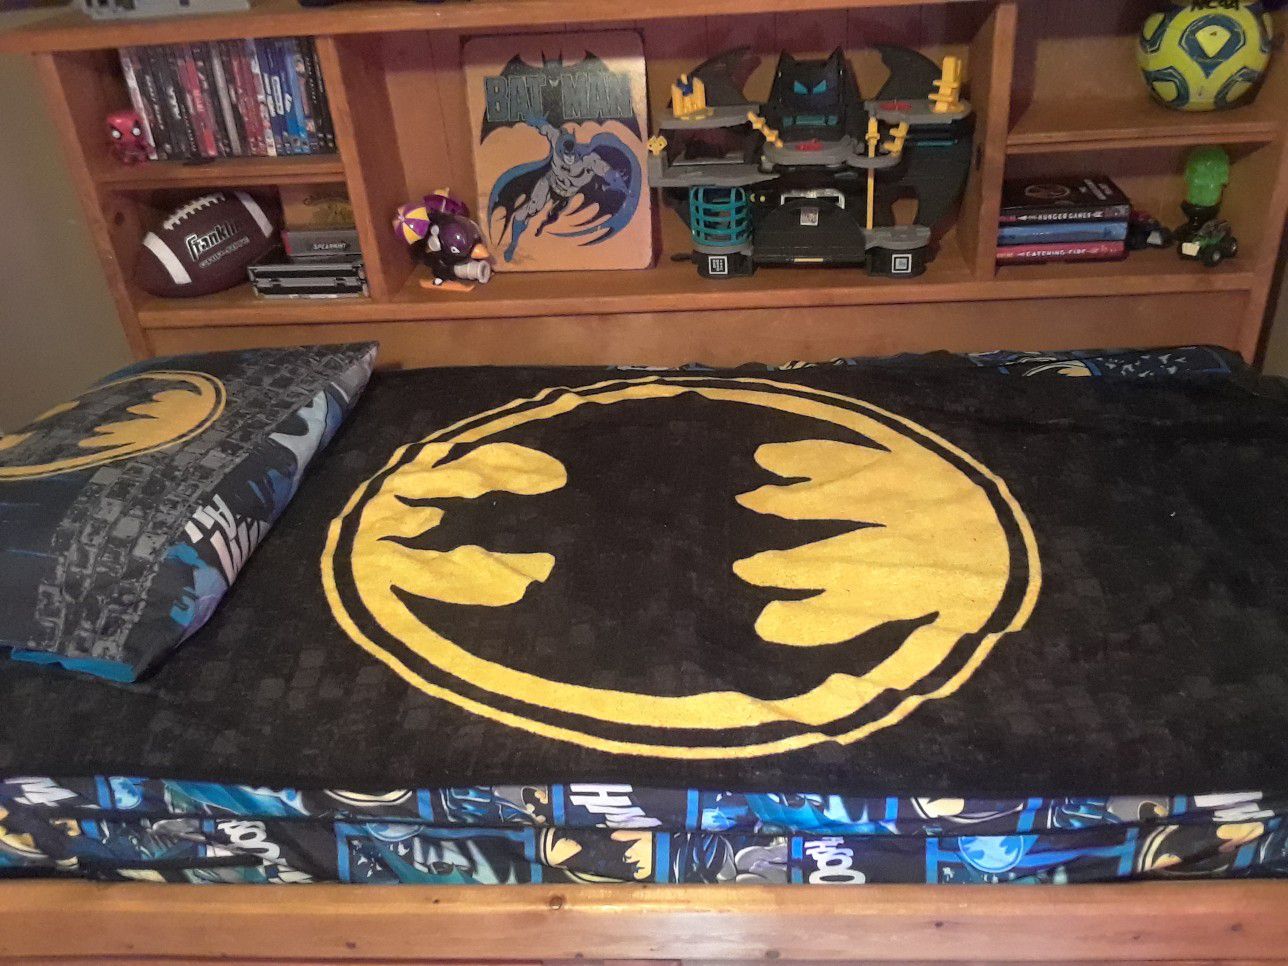 Batman bedding